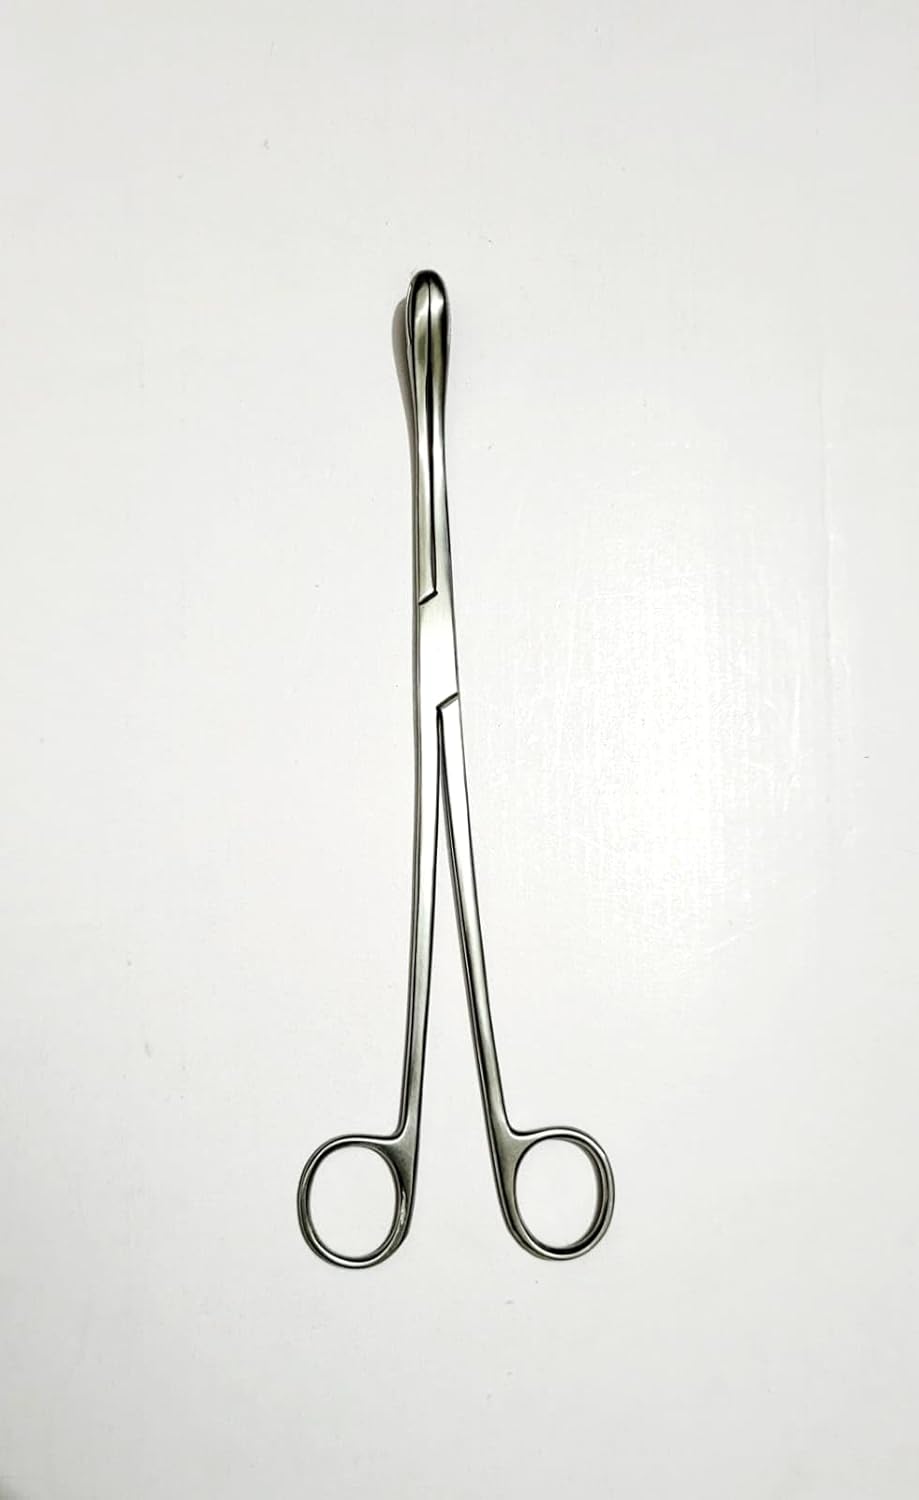 Ovum Forcep 10 Inch Surgical Instrument